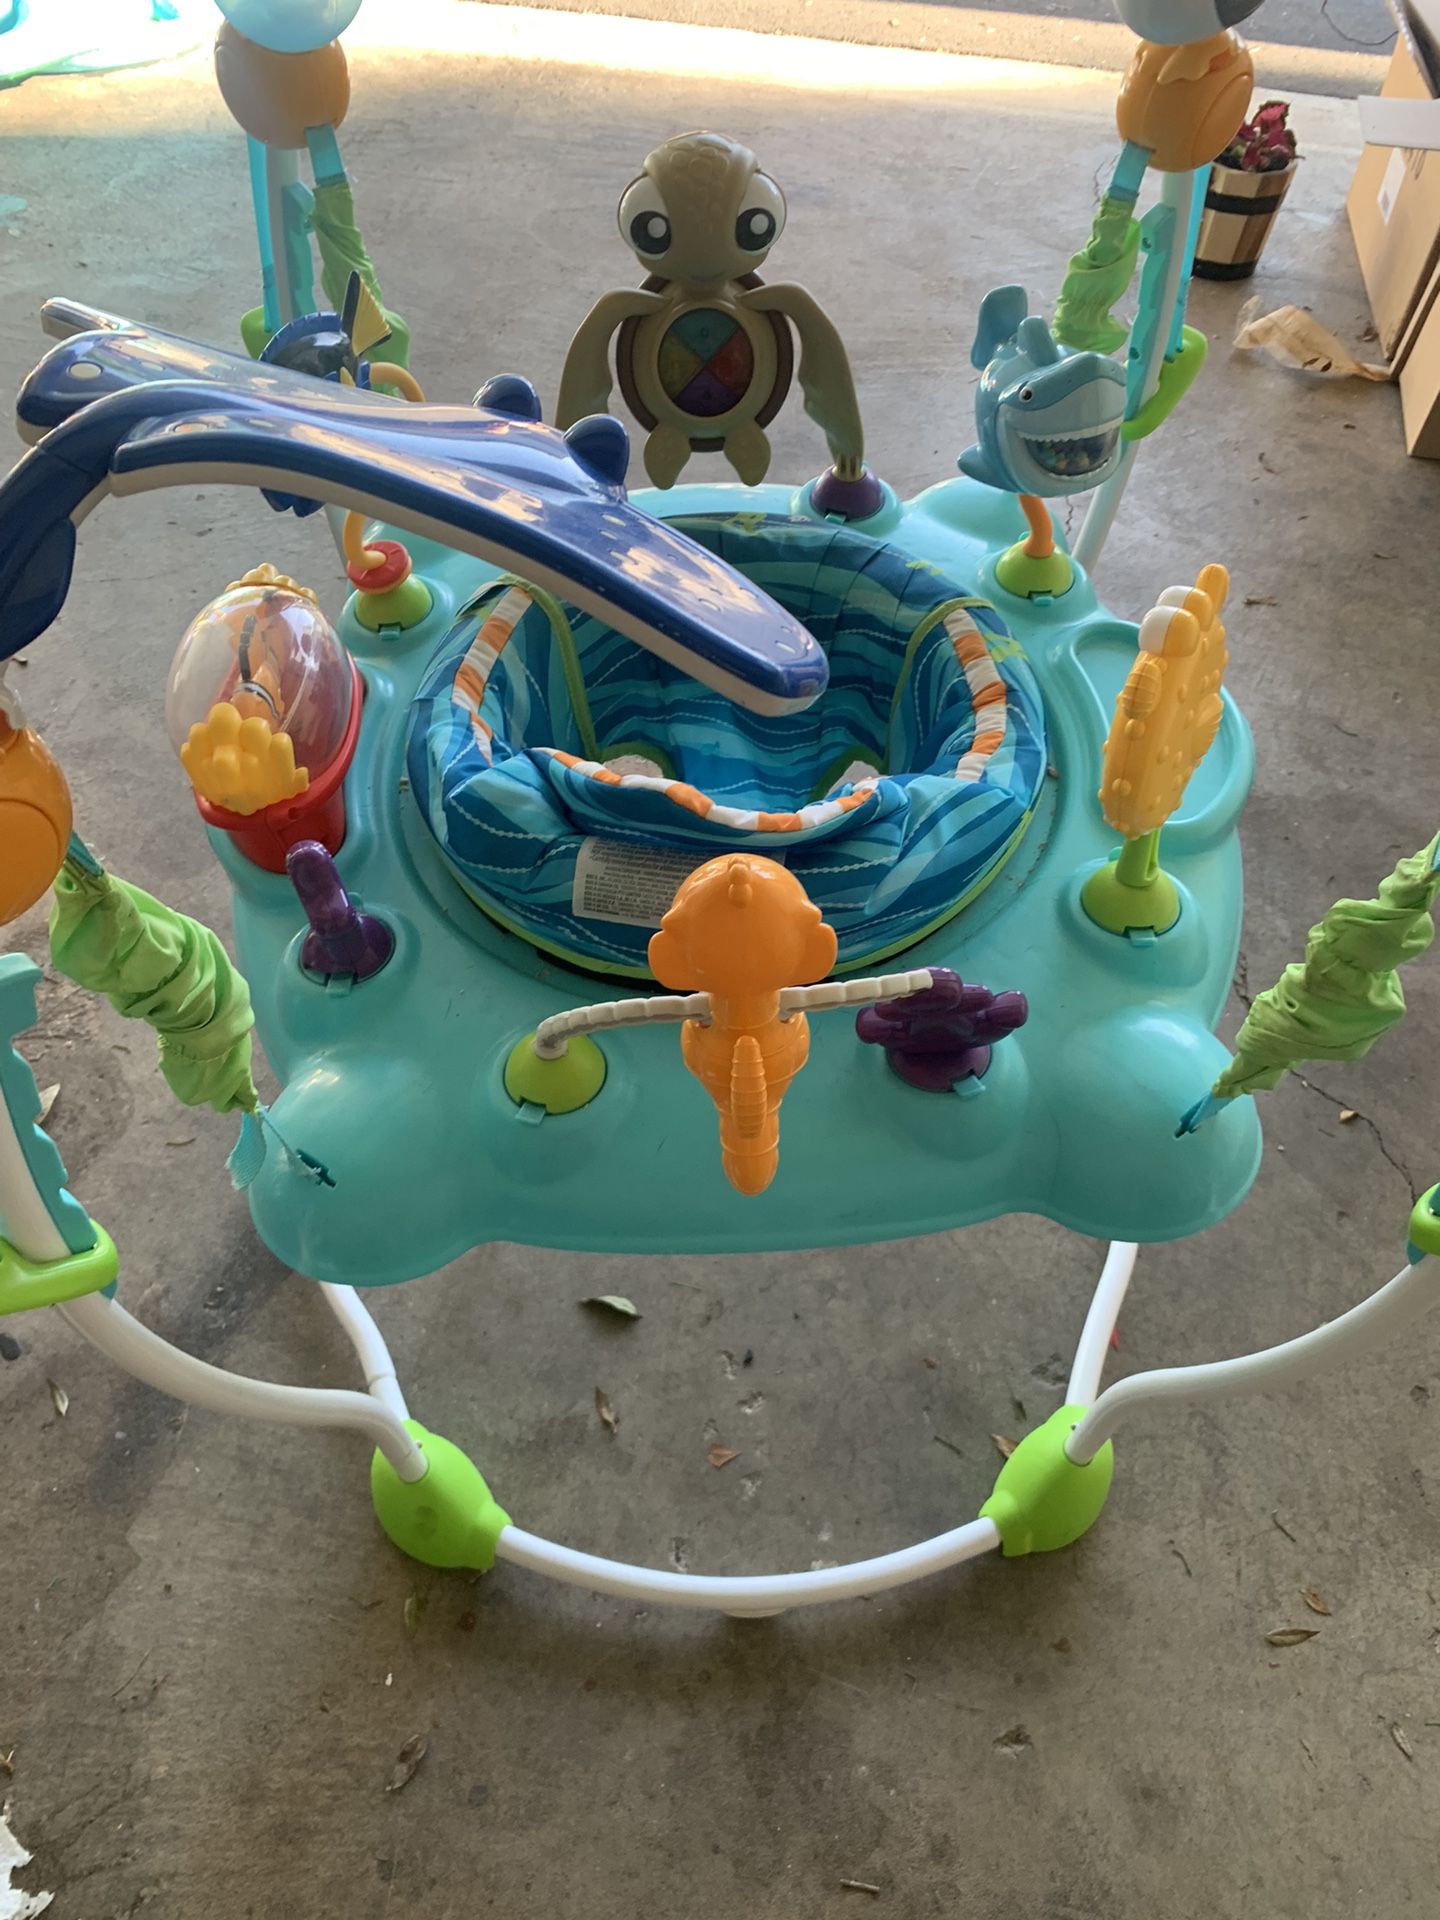 Nemo Themed Baby Bouncer 